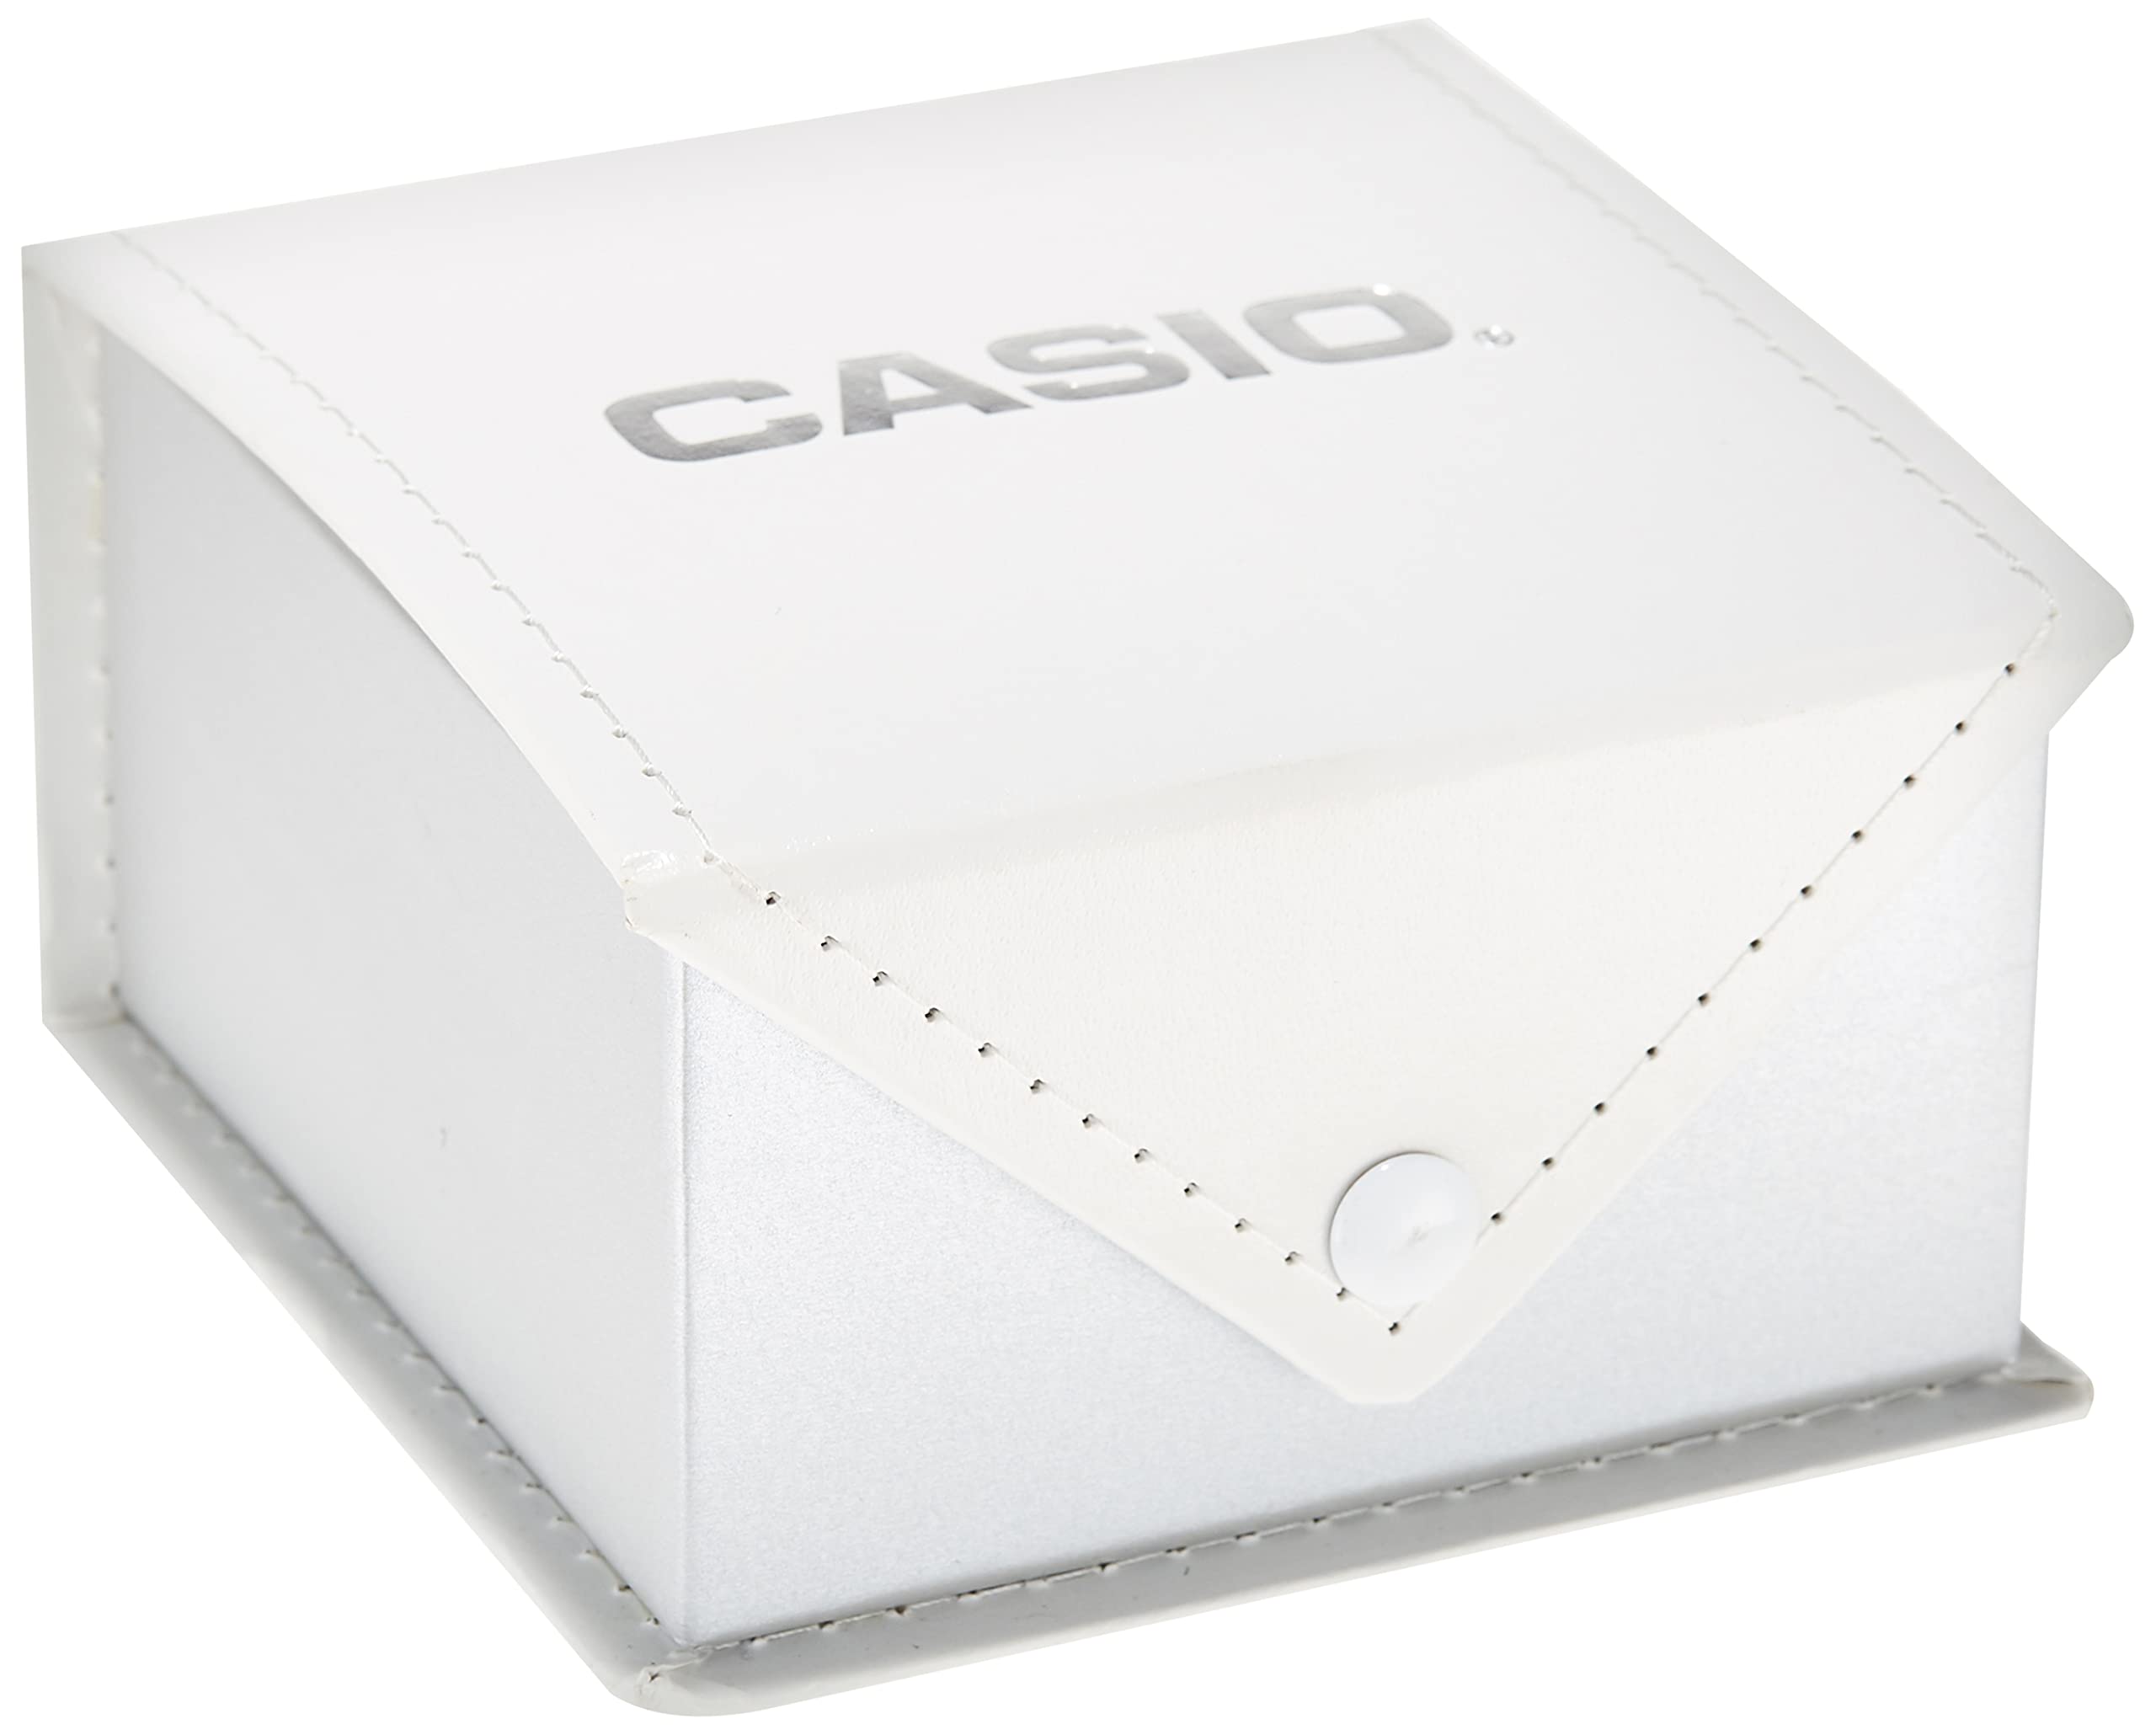 Casio Women's LTP-1177A-4A1 Dress Analog Display Quartz Silver Watch